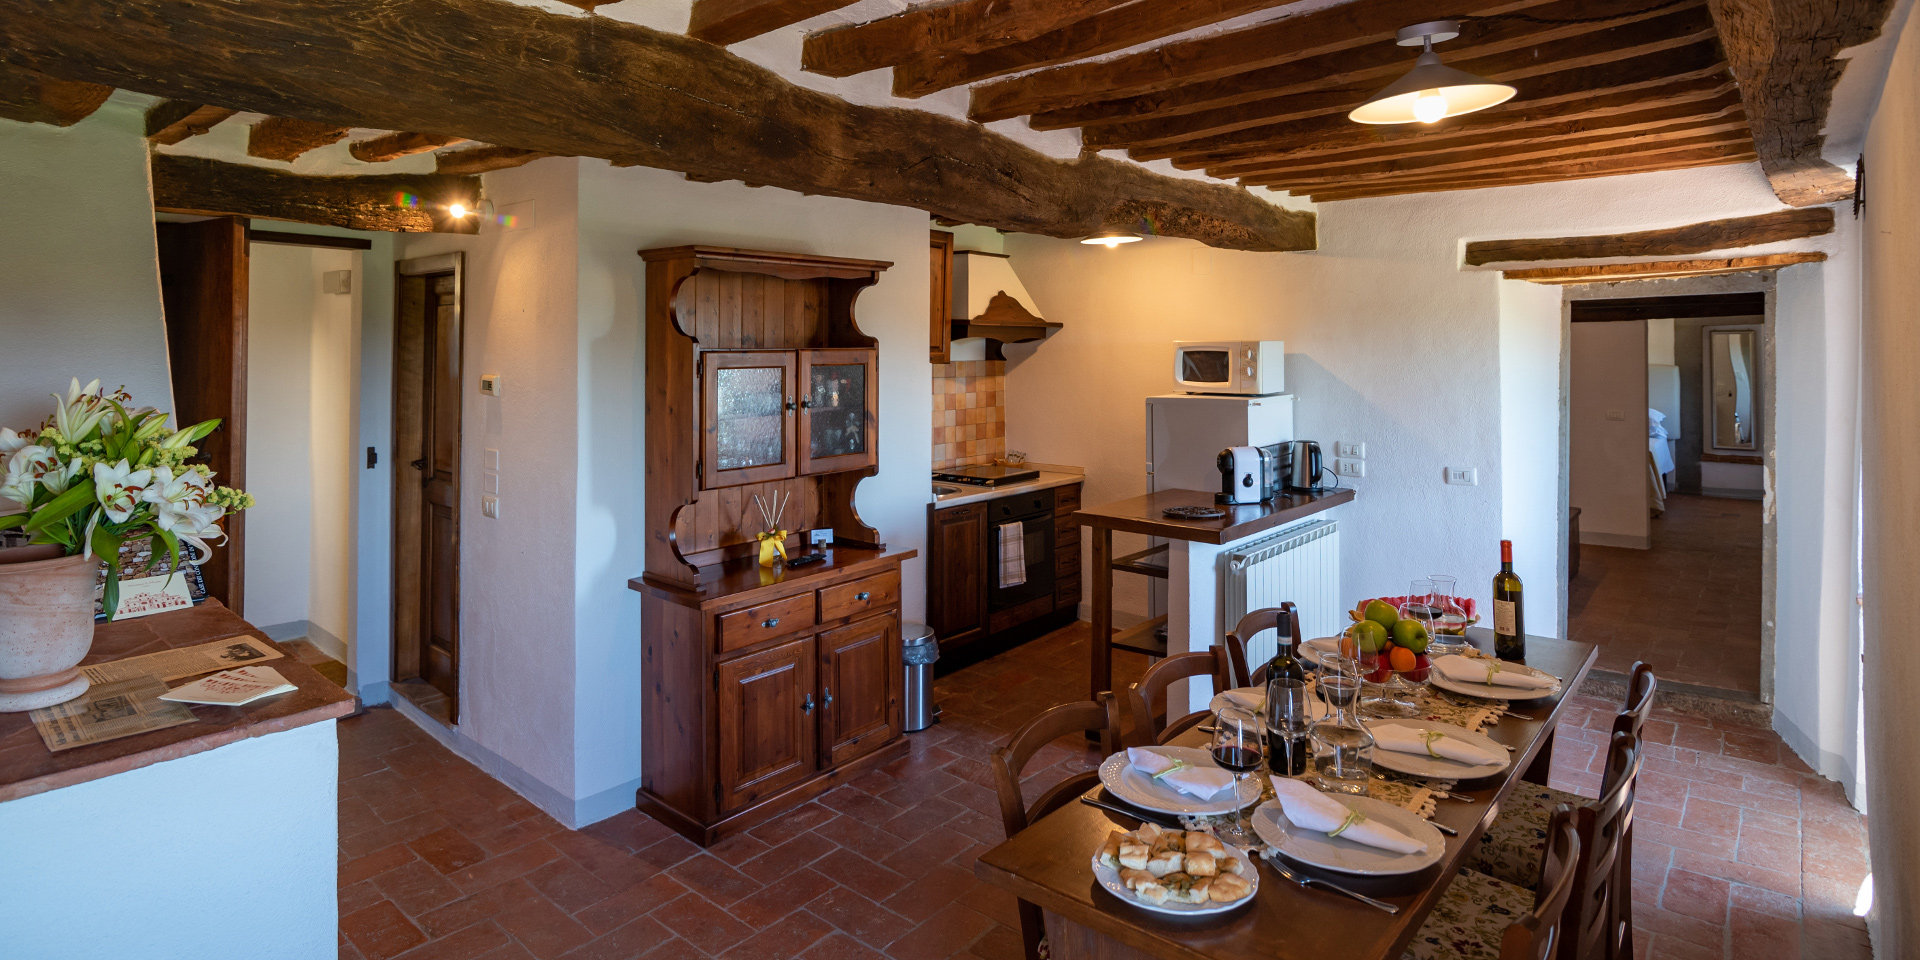 Living room and kitchen in Saena Apartment, Monastero San Silvestro